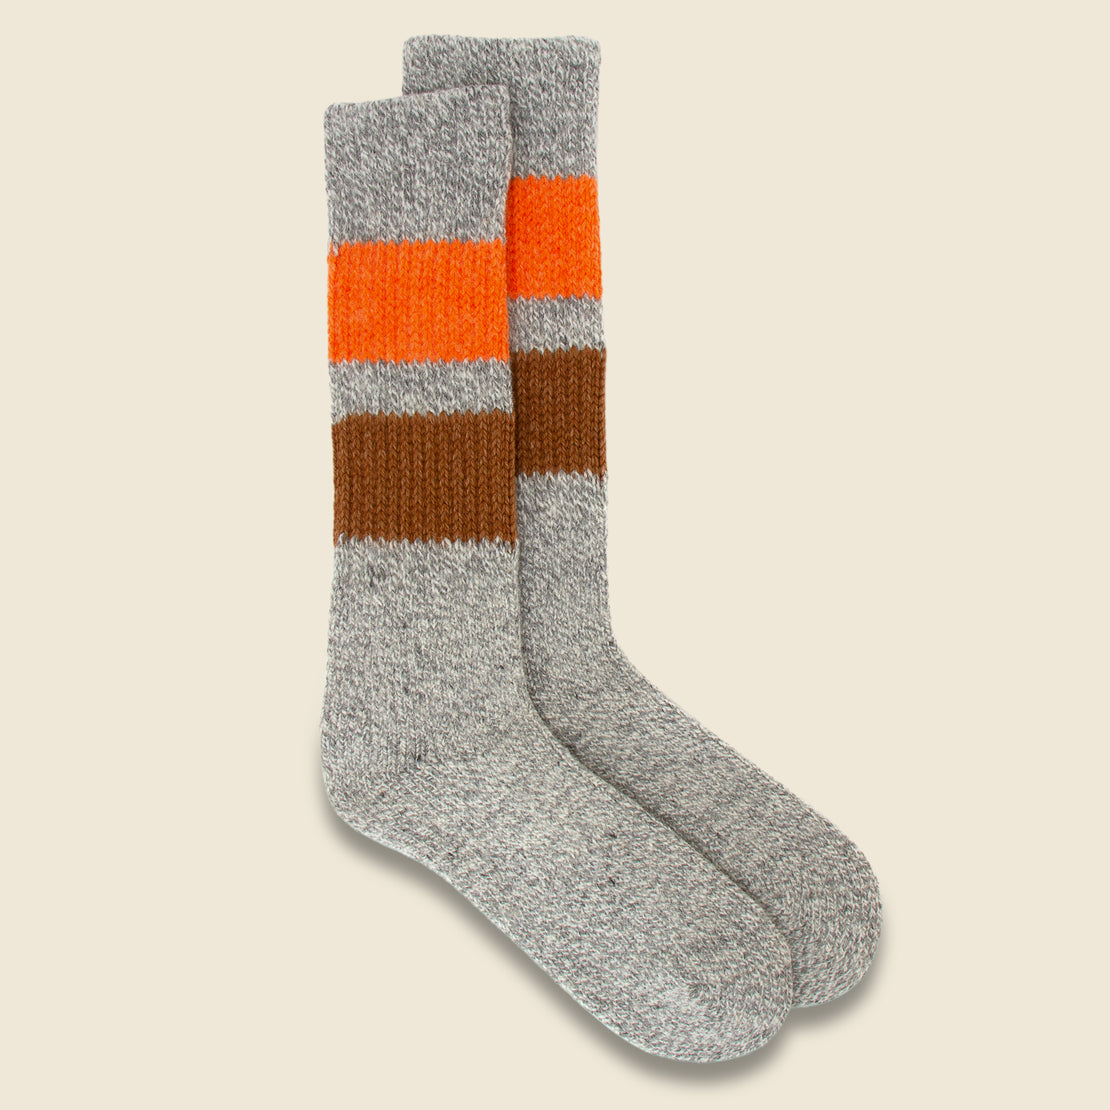 RoToTo Retro Winter Sock - Grey/Light Orange/Camel